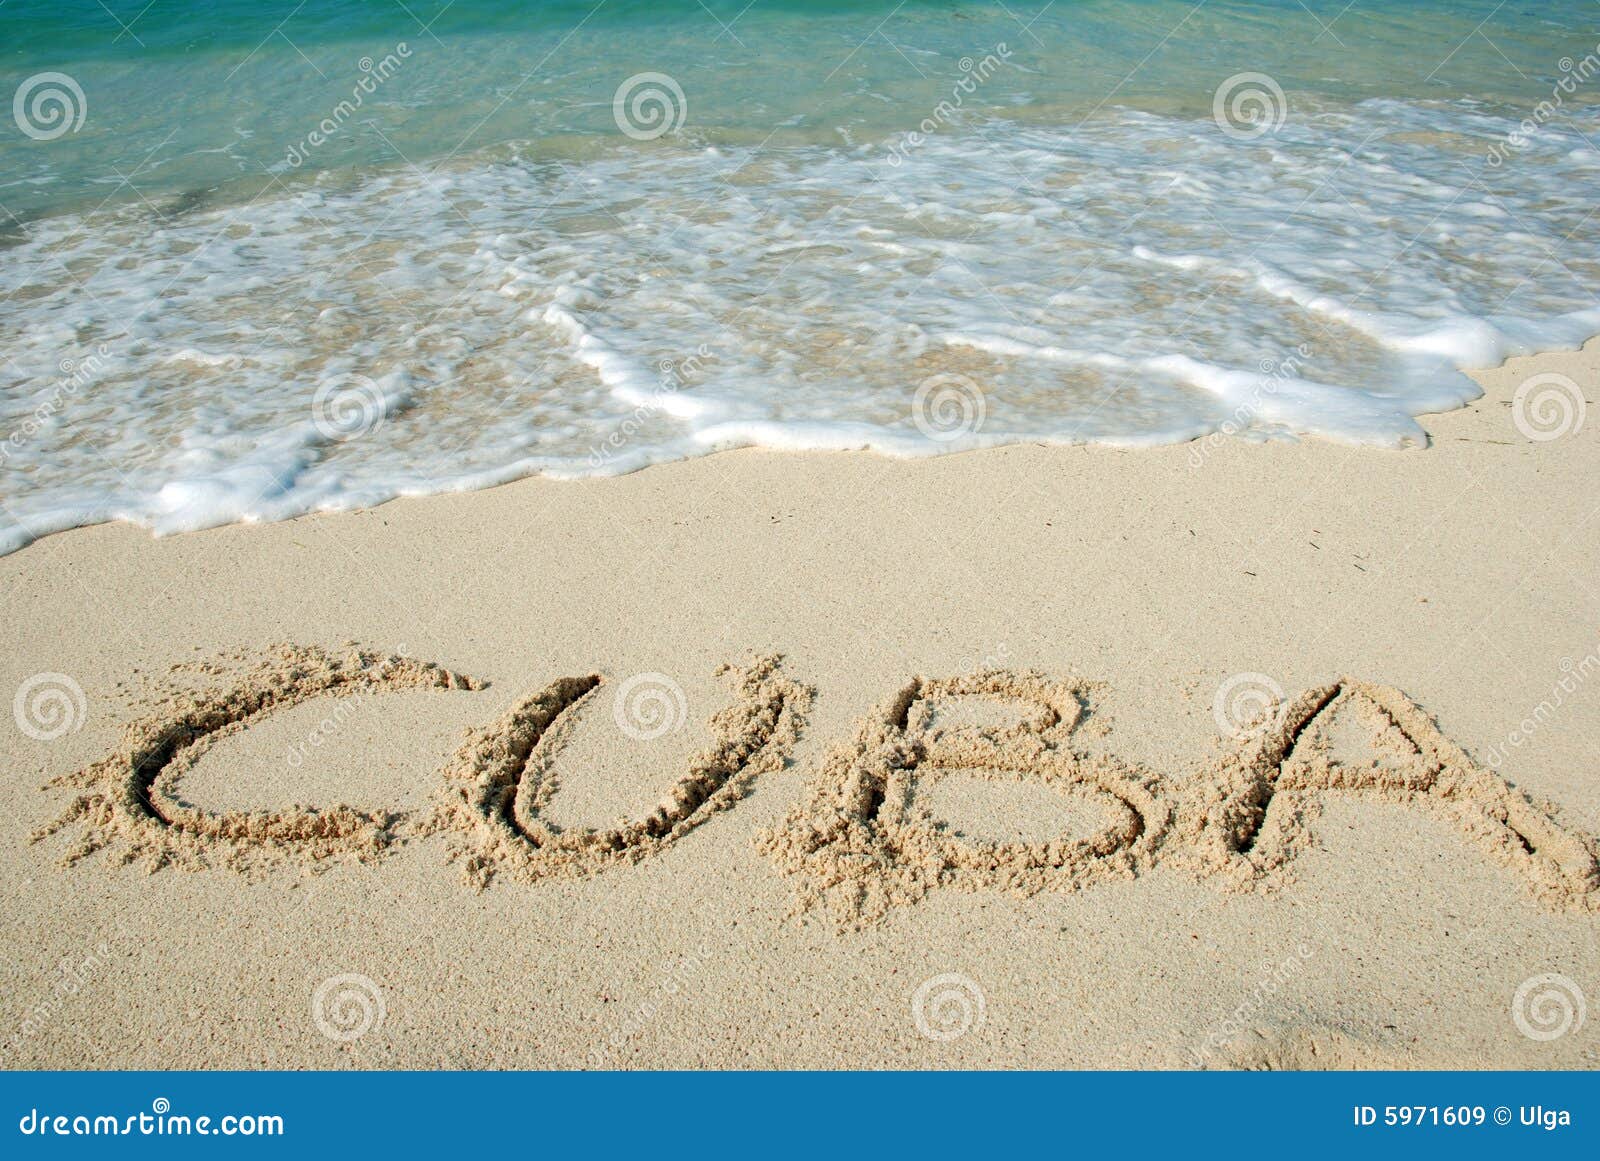 cuba beach